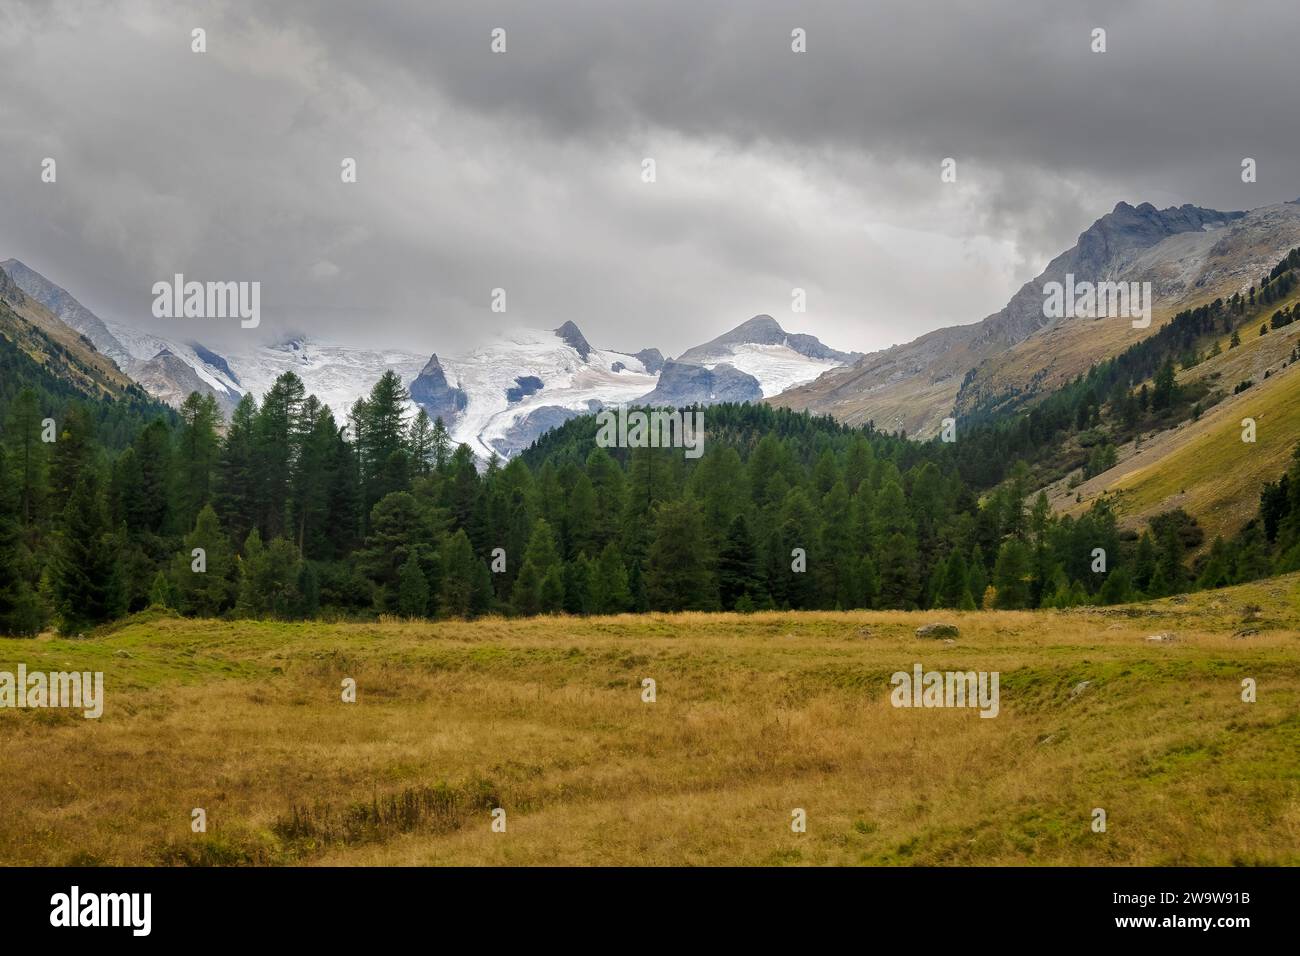 The Roseg valley under the peaks Il Caputschin, La Muongia, Forcola Alta and Roseg Glacier, St. Moritz, Switzerland Stock Photo